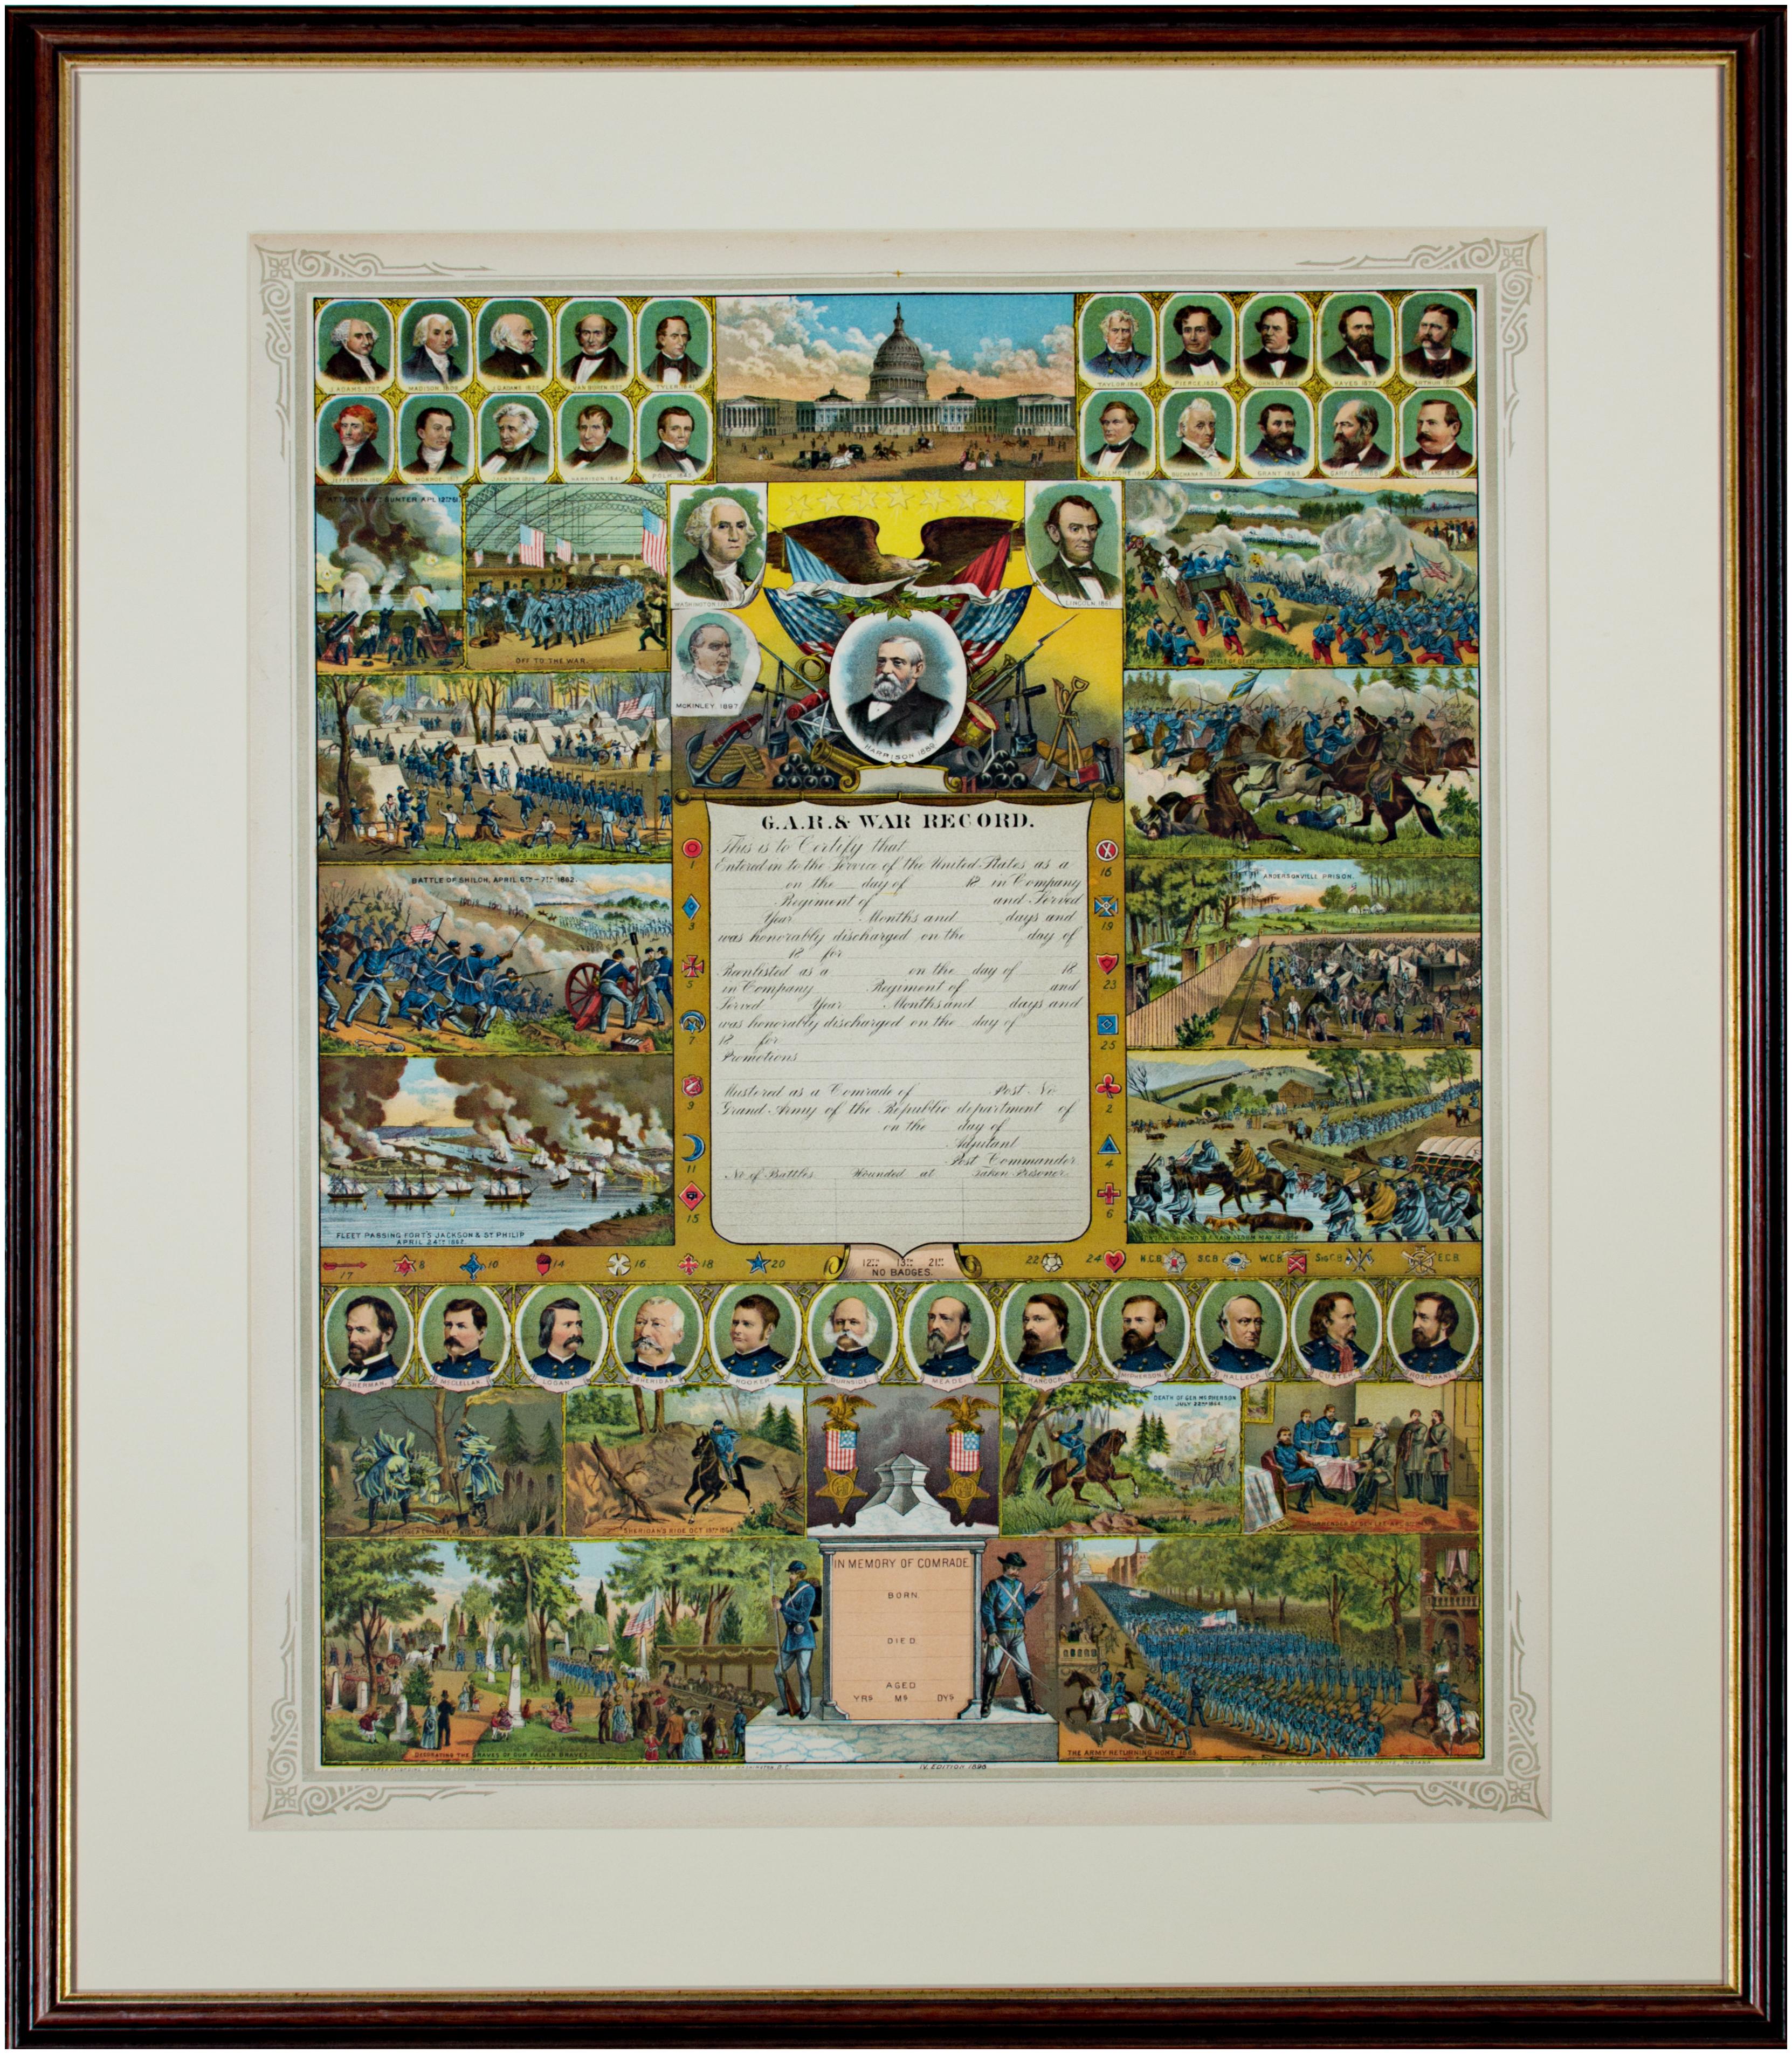 J.M. Vickroy & Co. Figurative Print - 'Government Accounts Registry & War Record' original chromolithograph